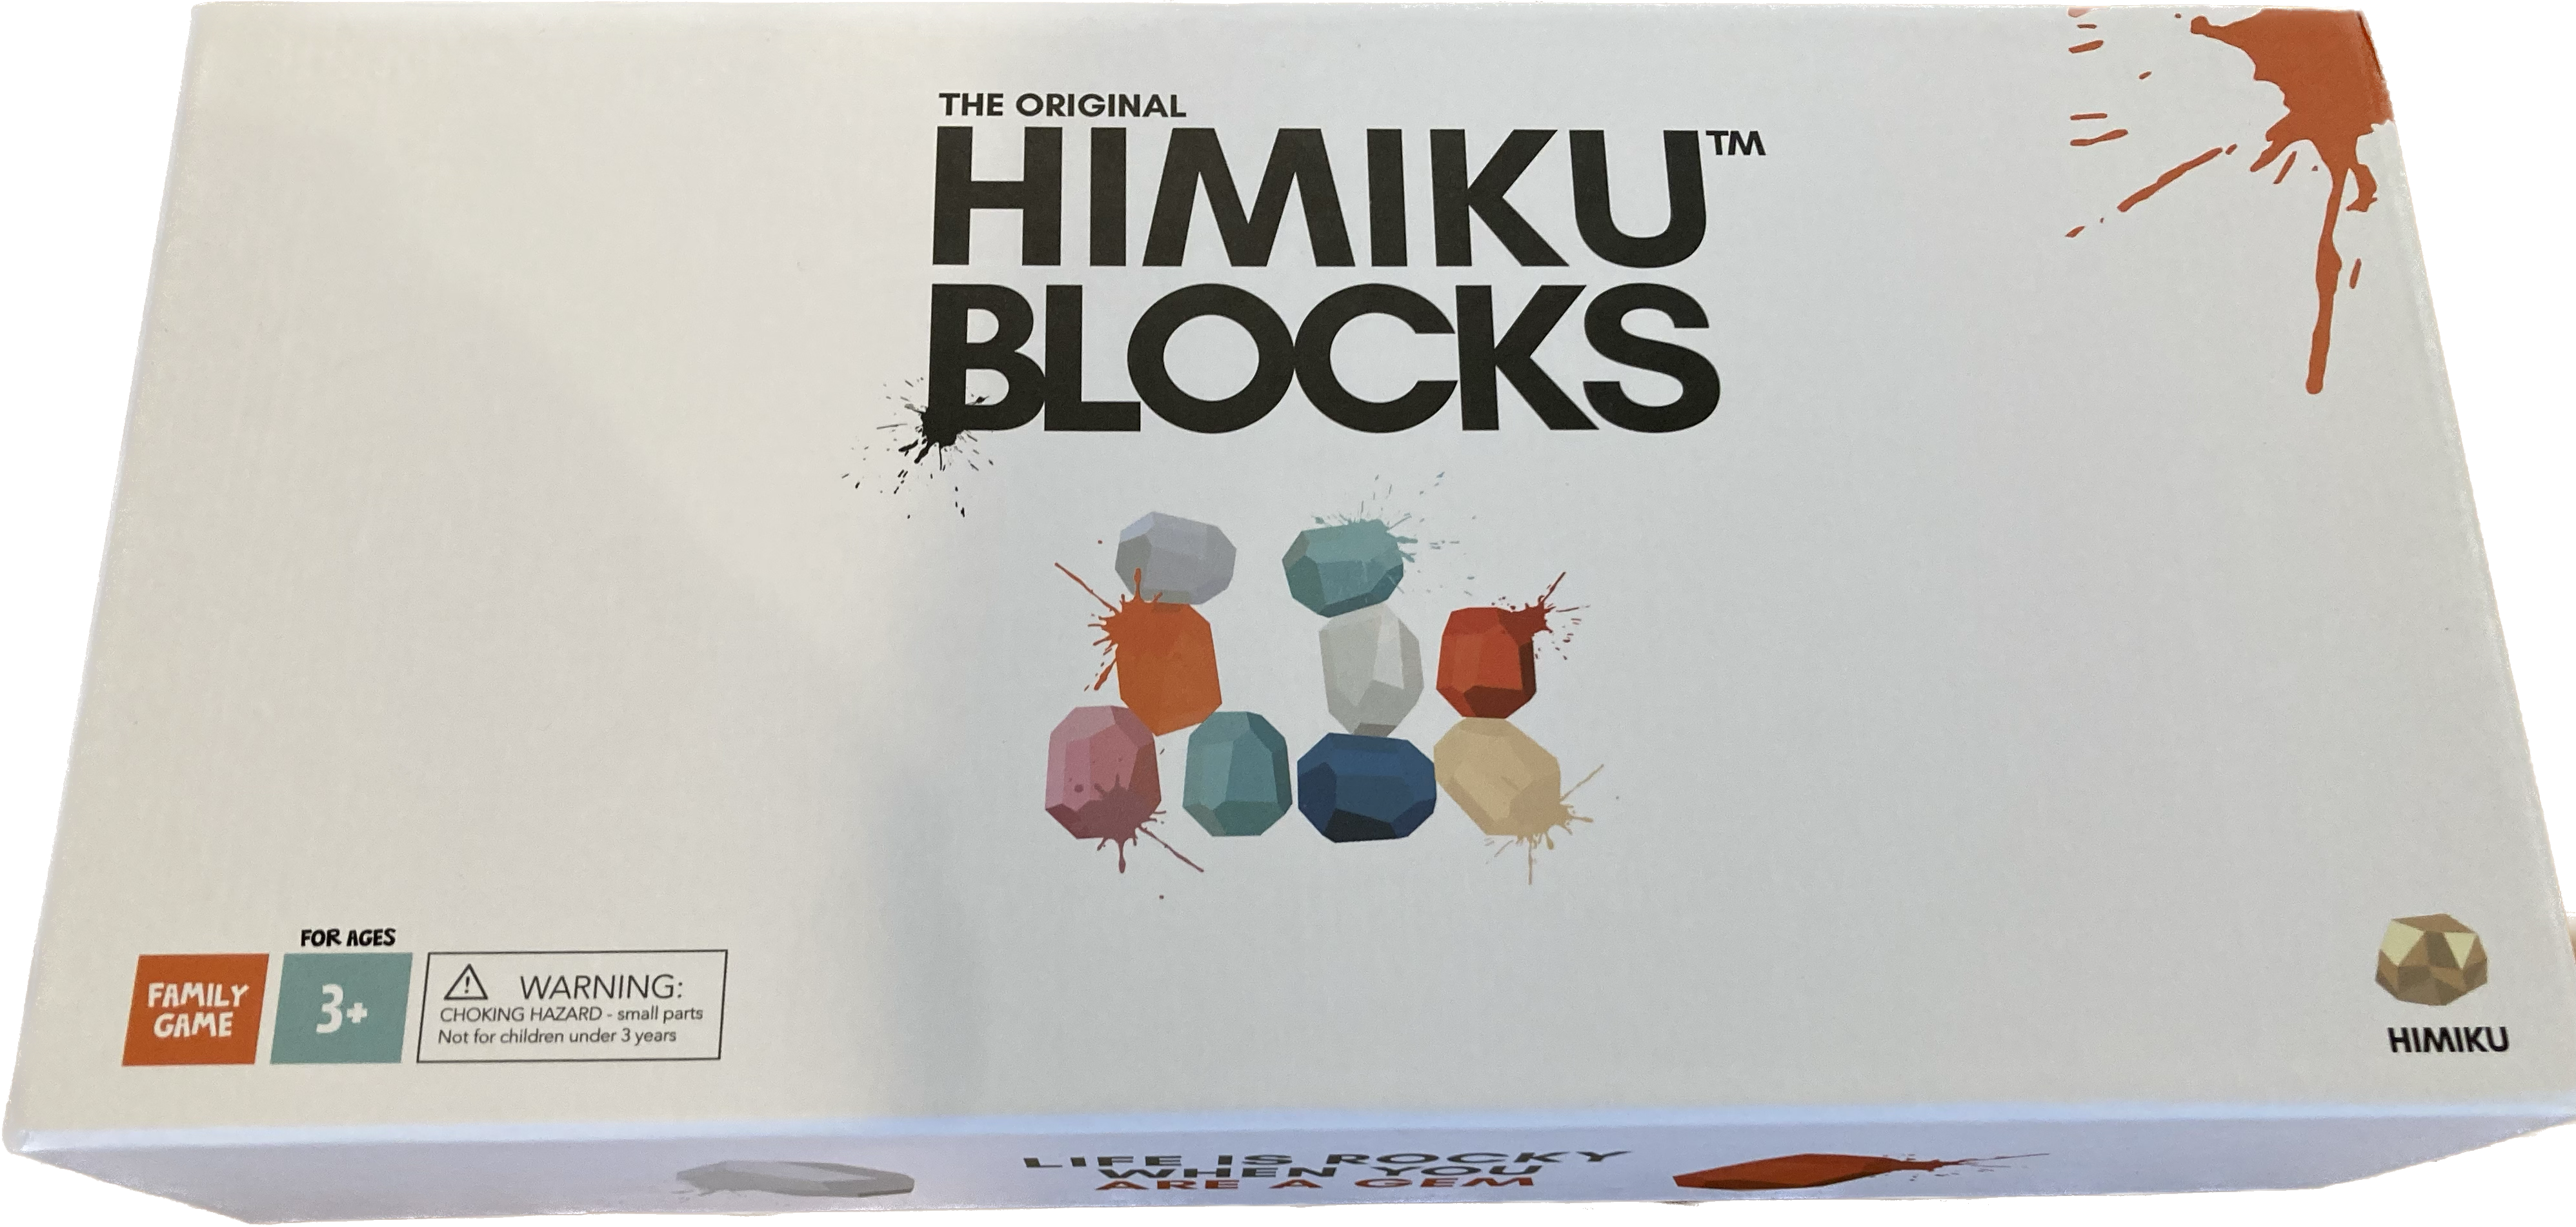 HIMIKUBLOCKSの箱